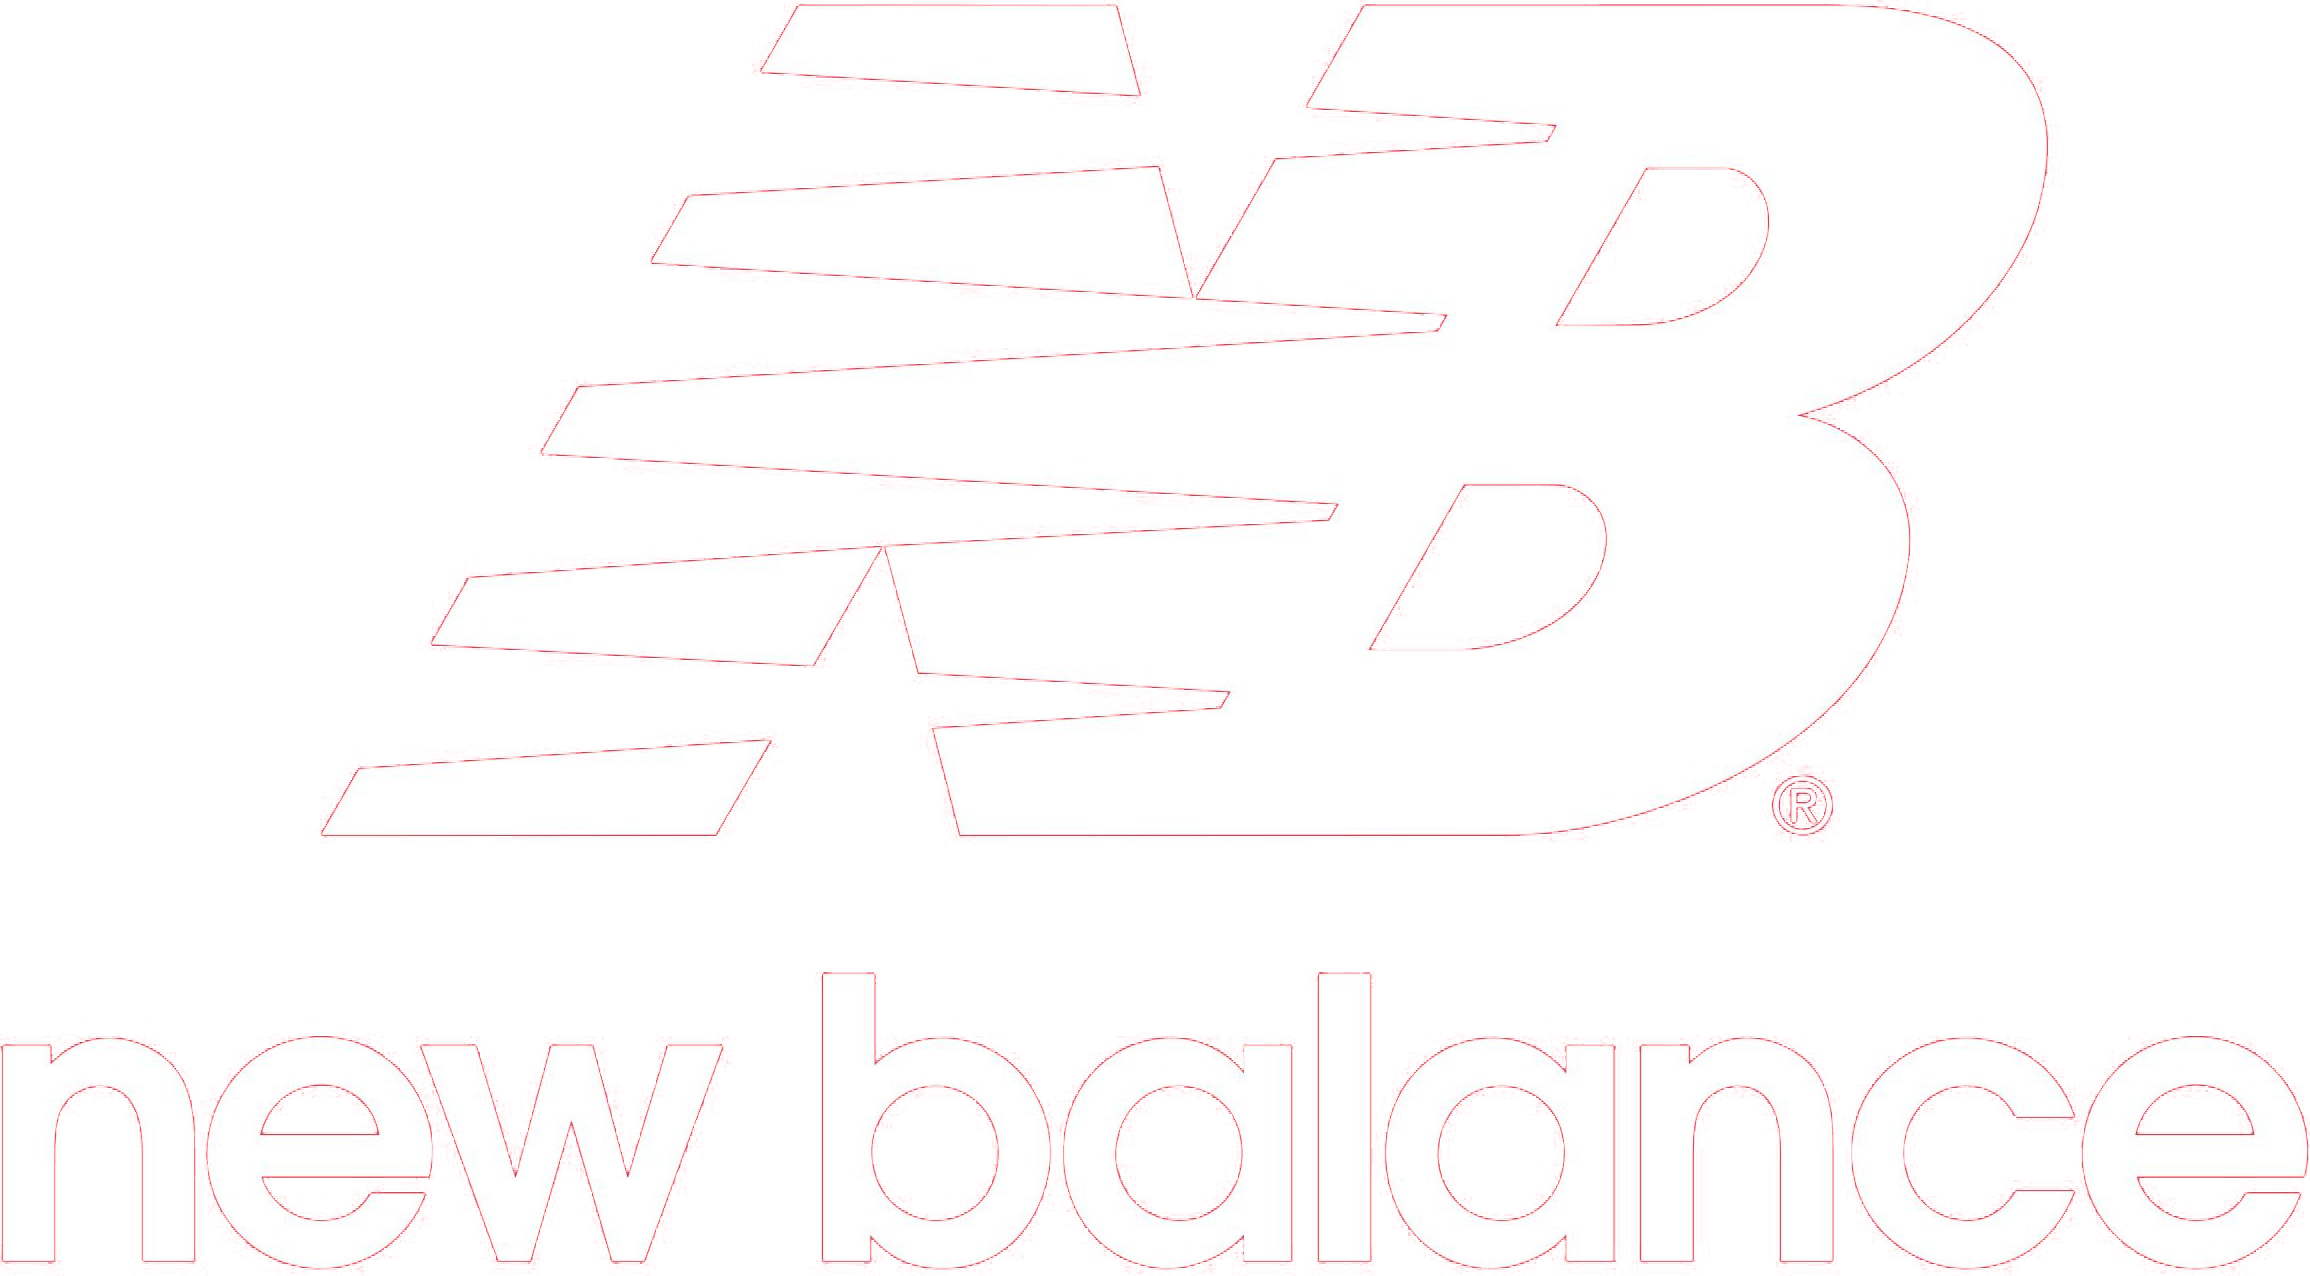 New Balance began as a Boston